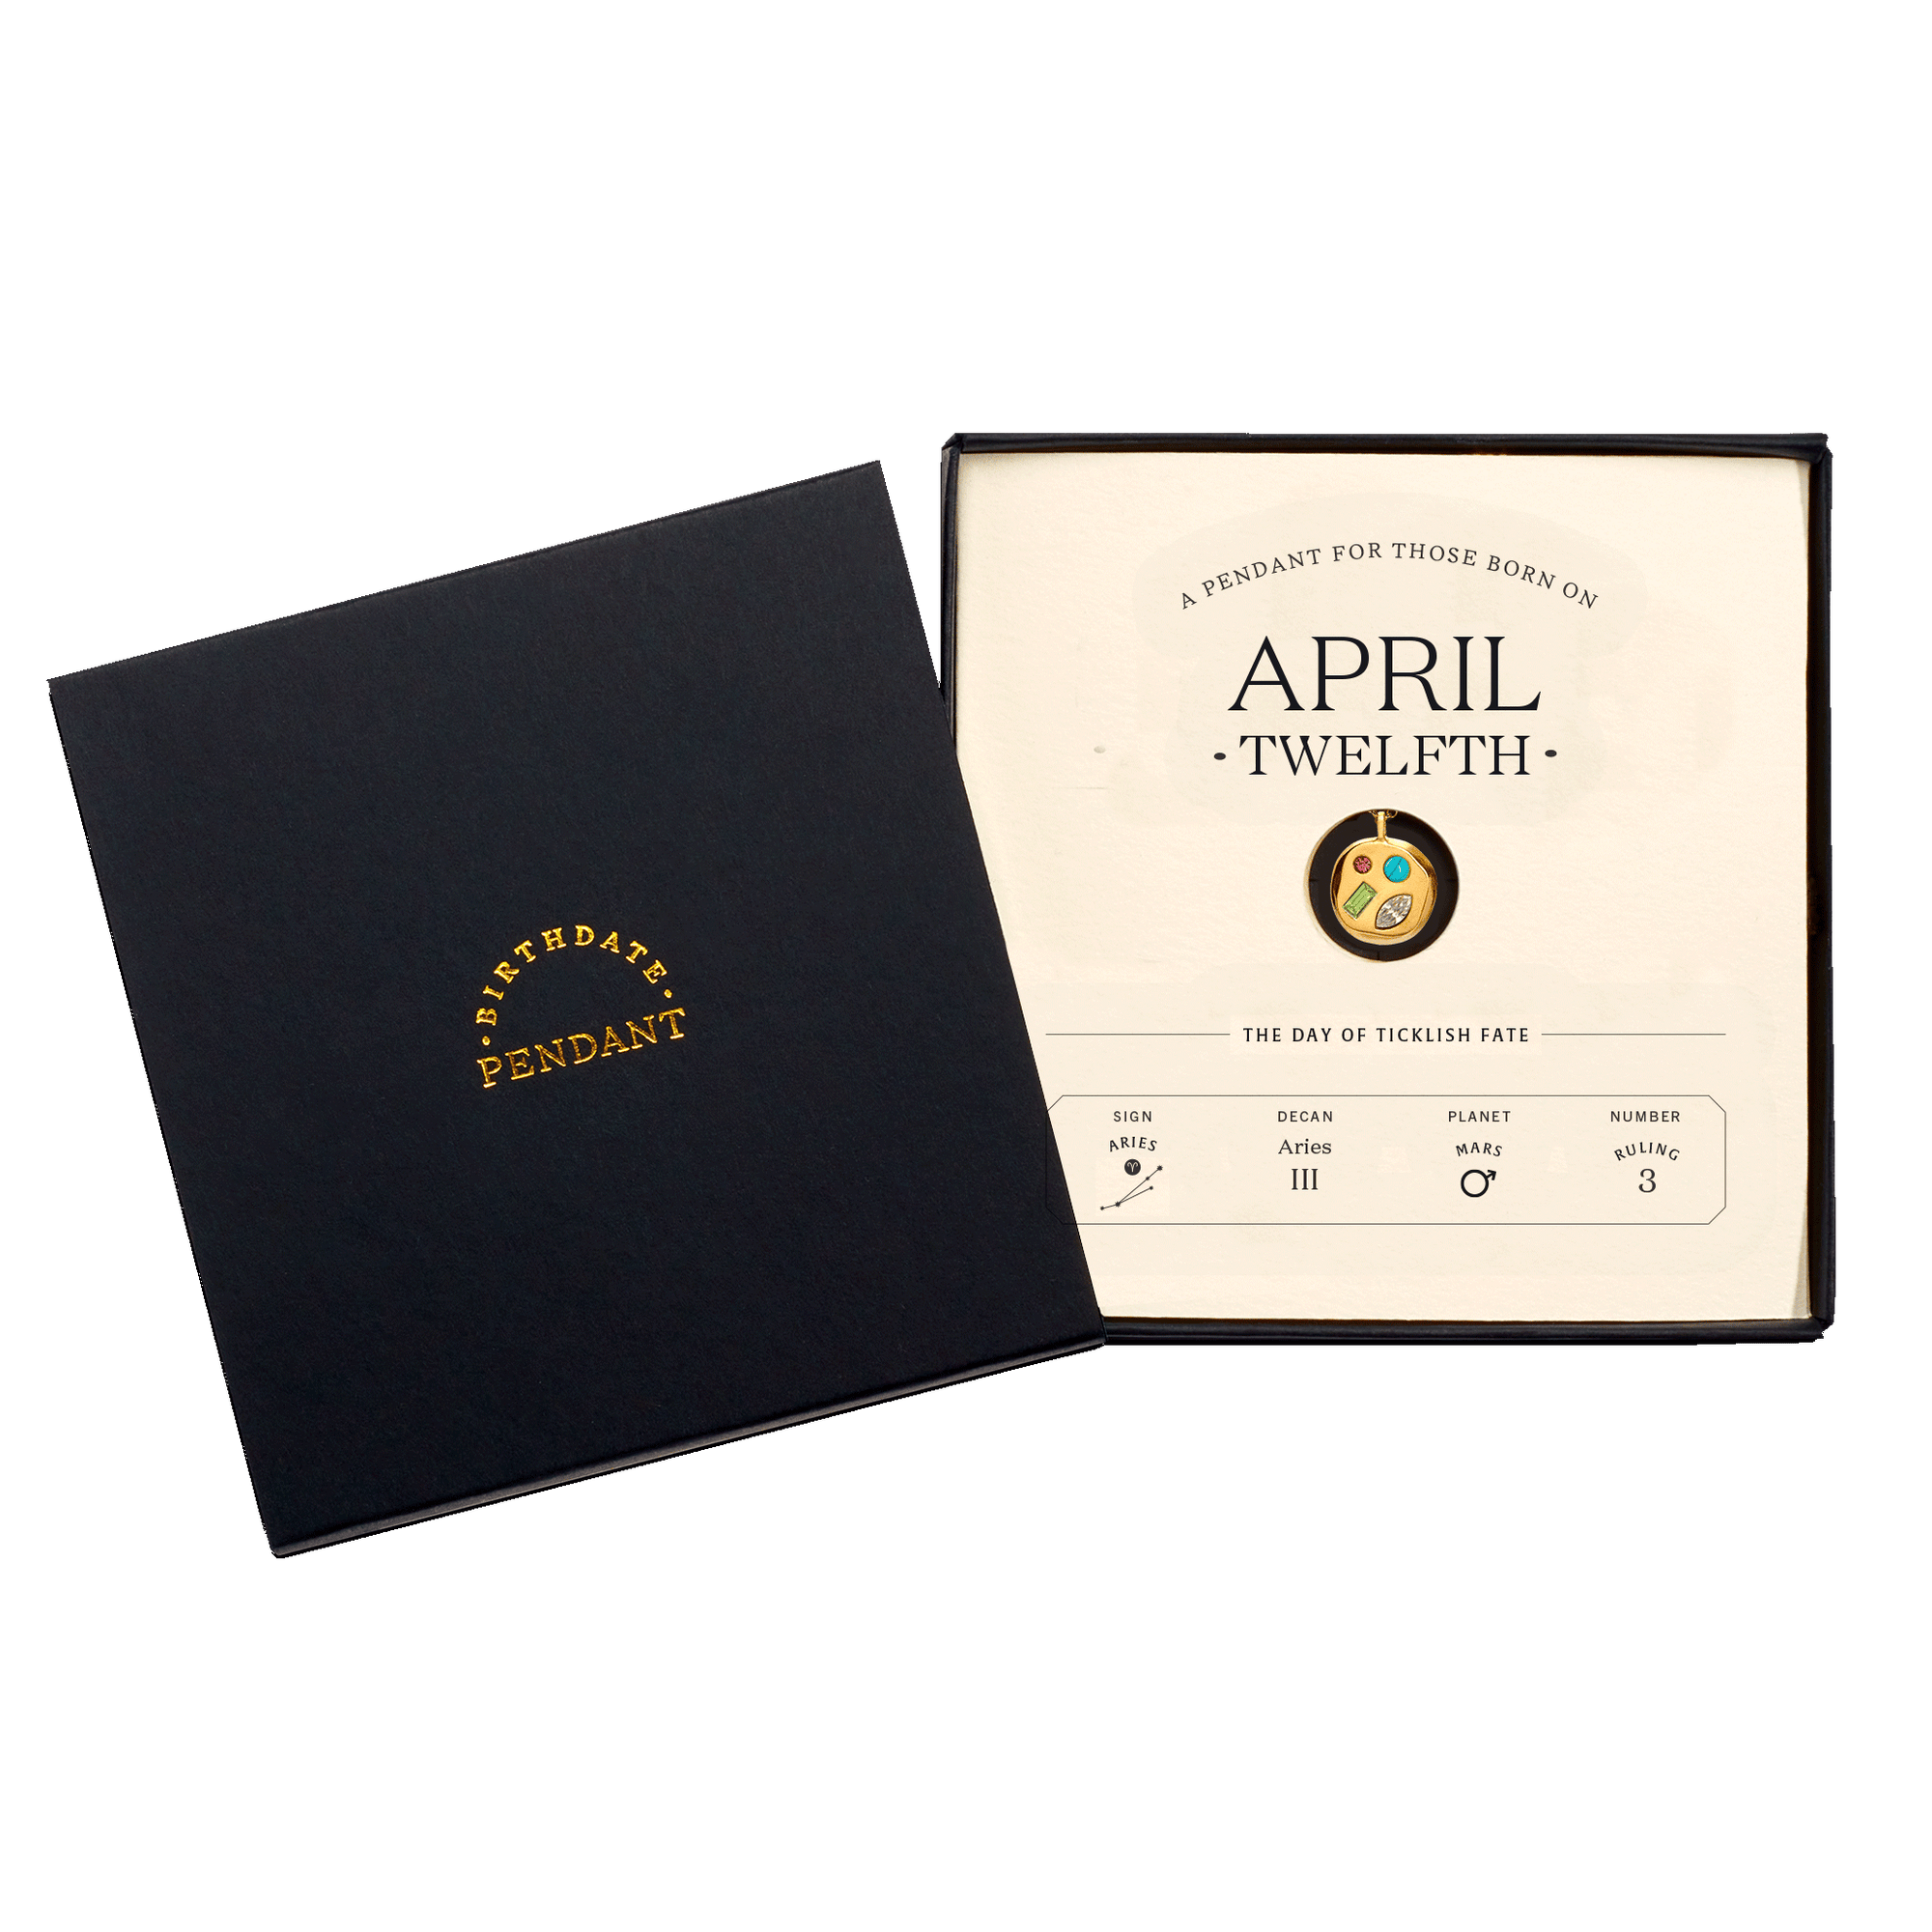 The April Twelfth Pendant inside its box